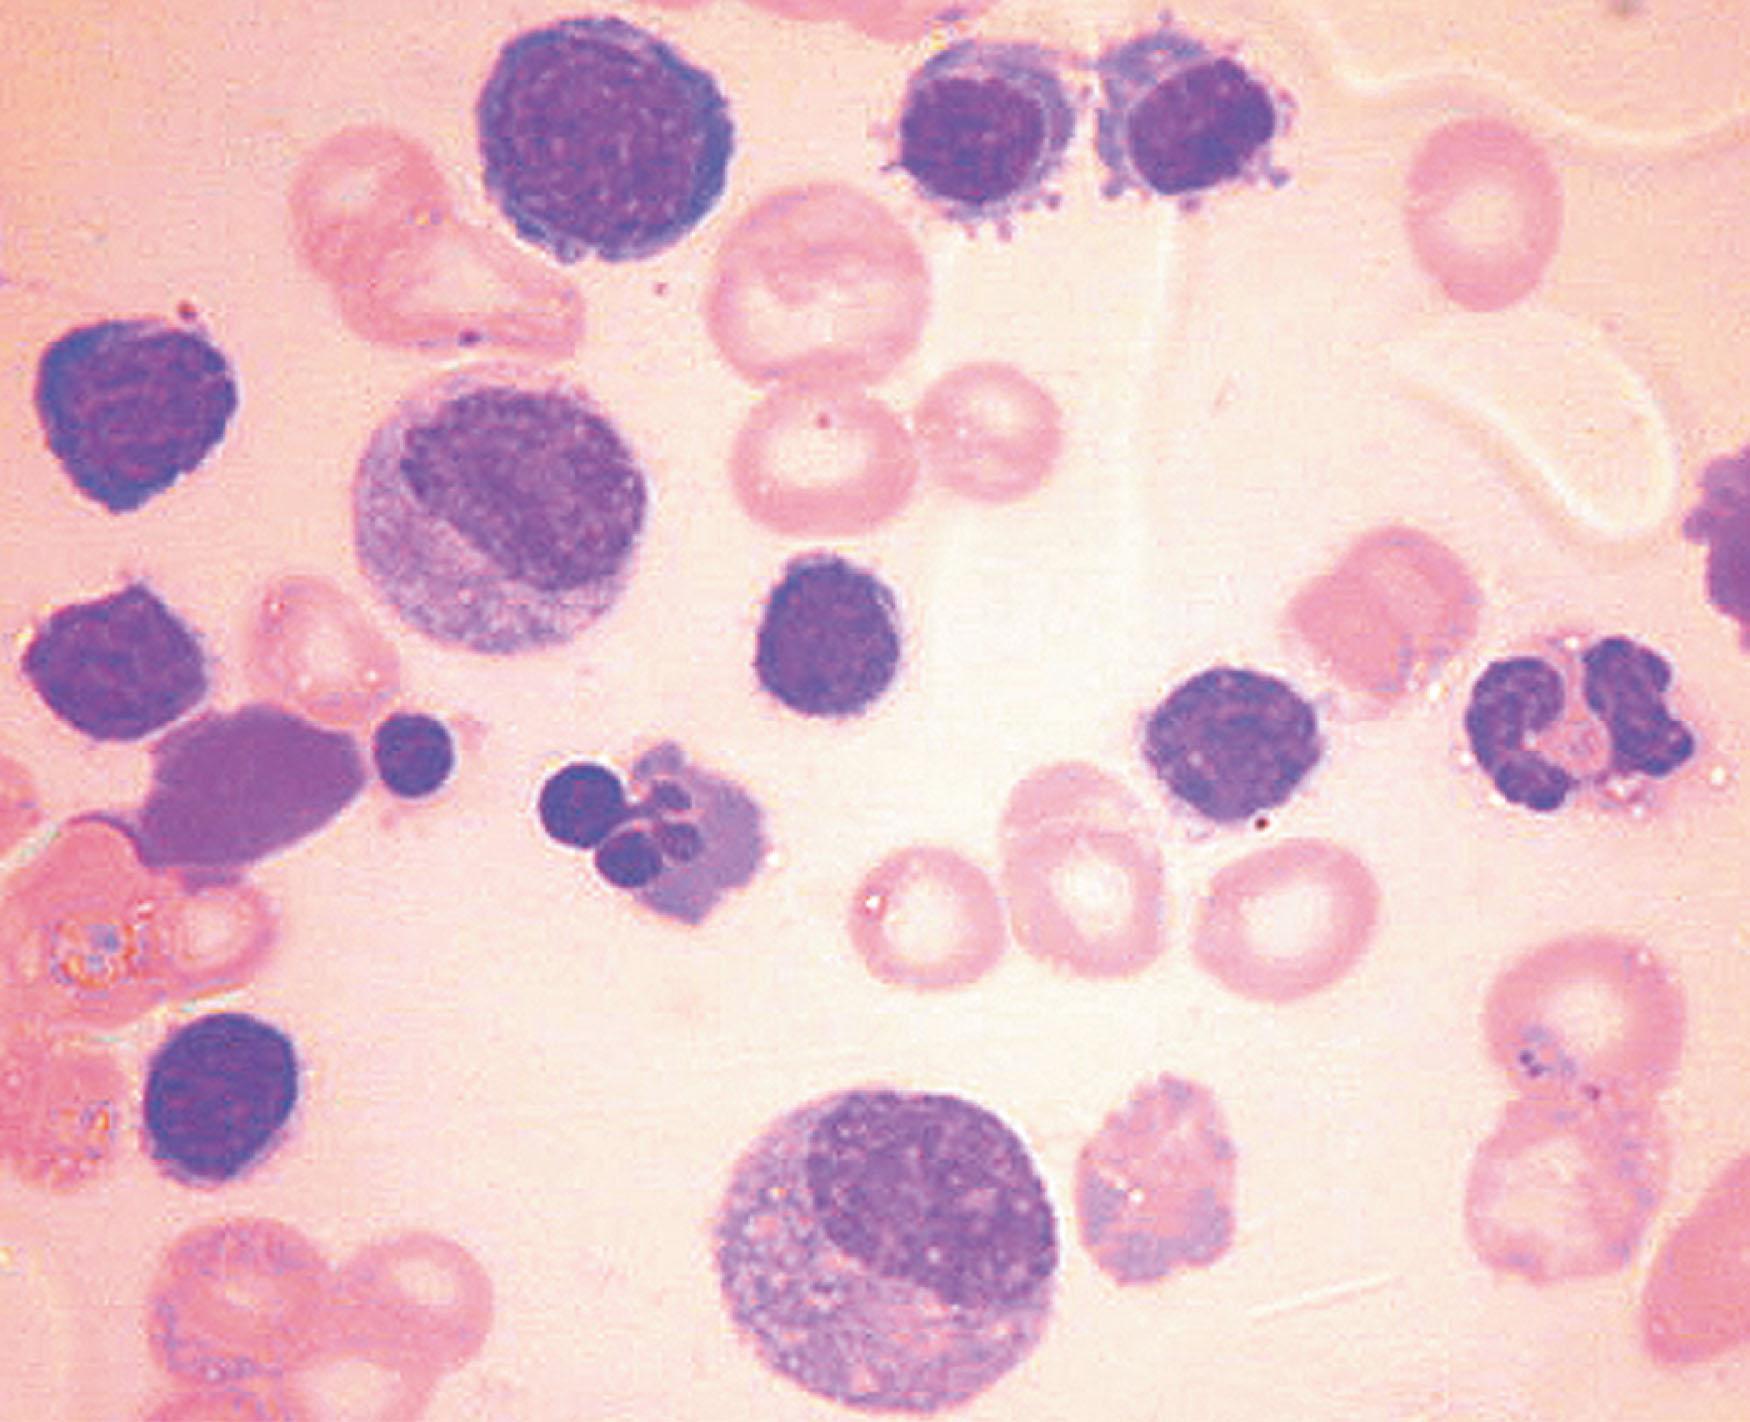 Figure 154.4, BONE MARROW ASPIRATE IN MALARIA.